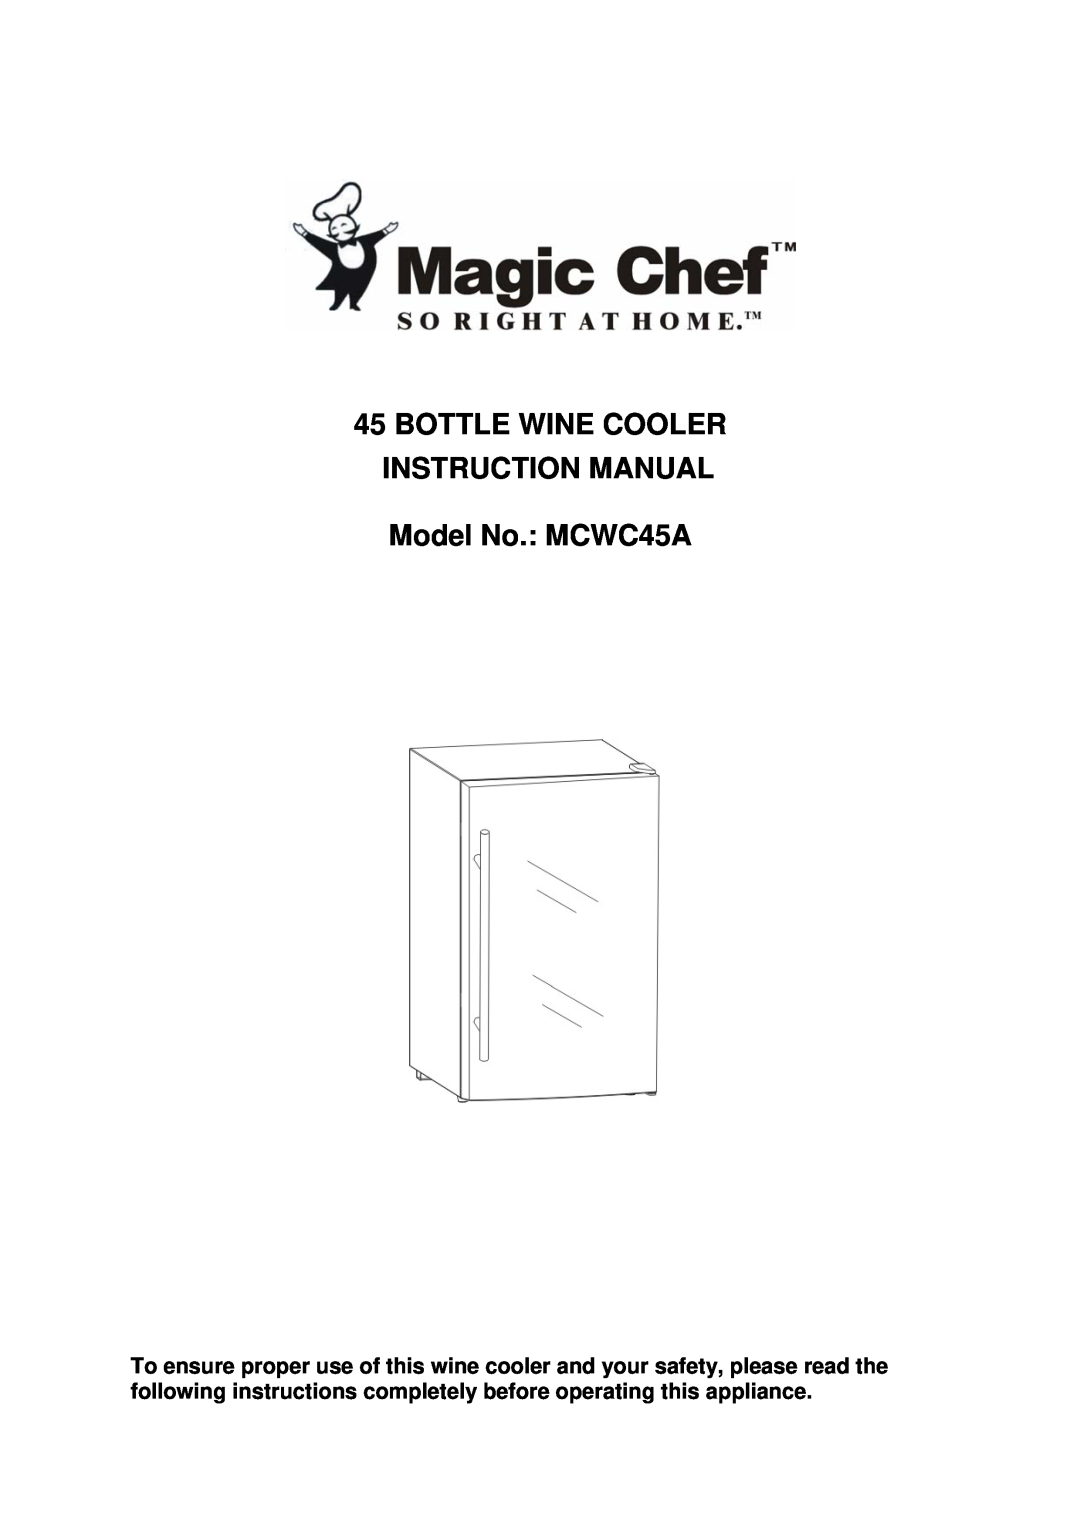 Magic Chef instruction manual Model No. MCWC45A 